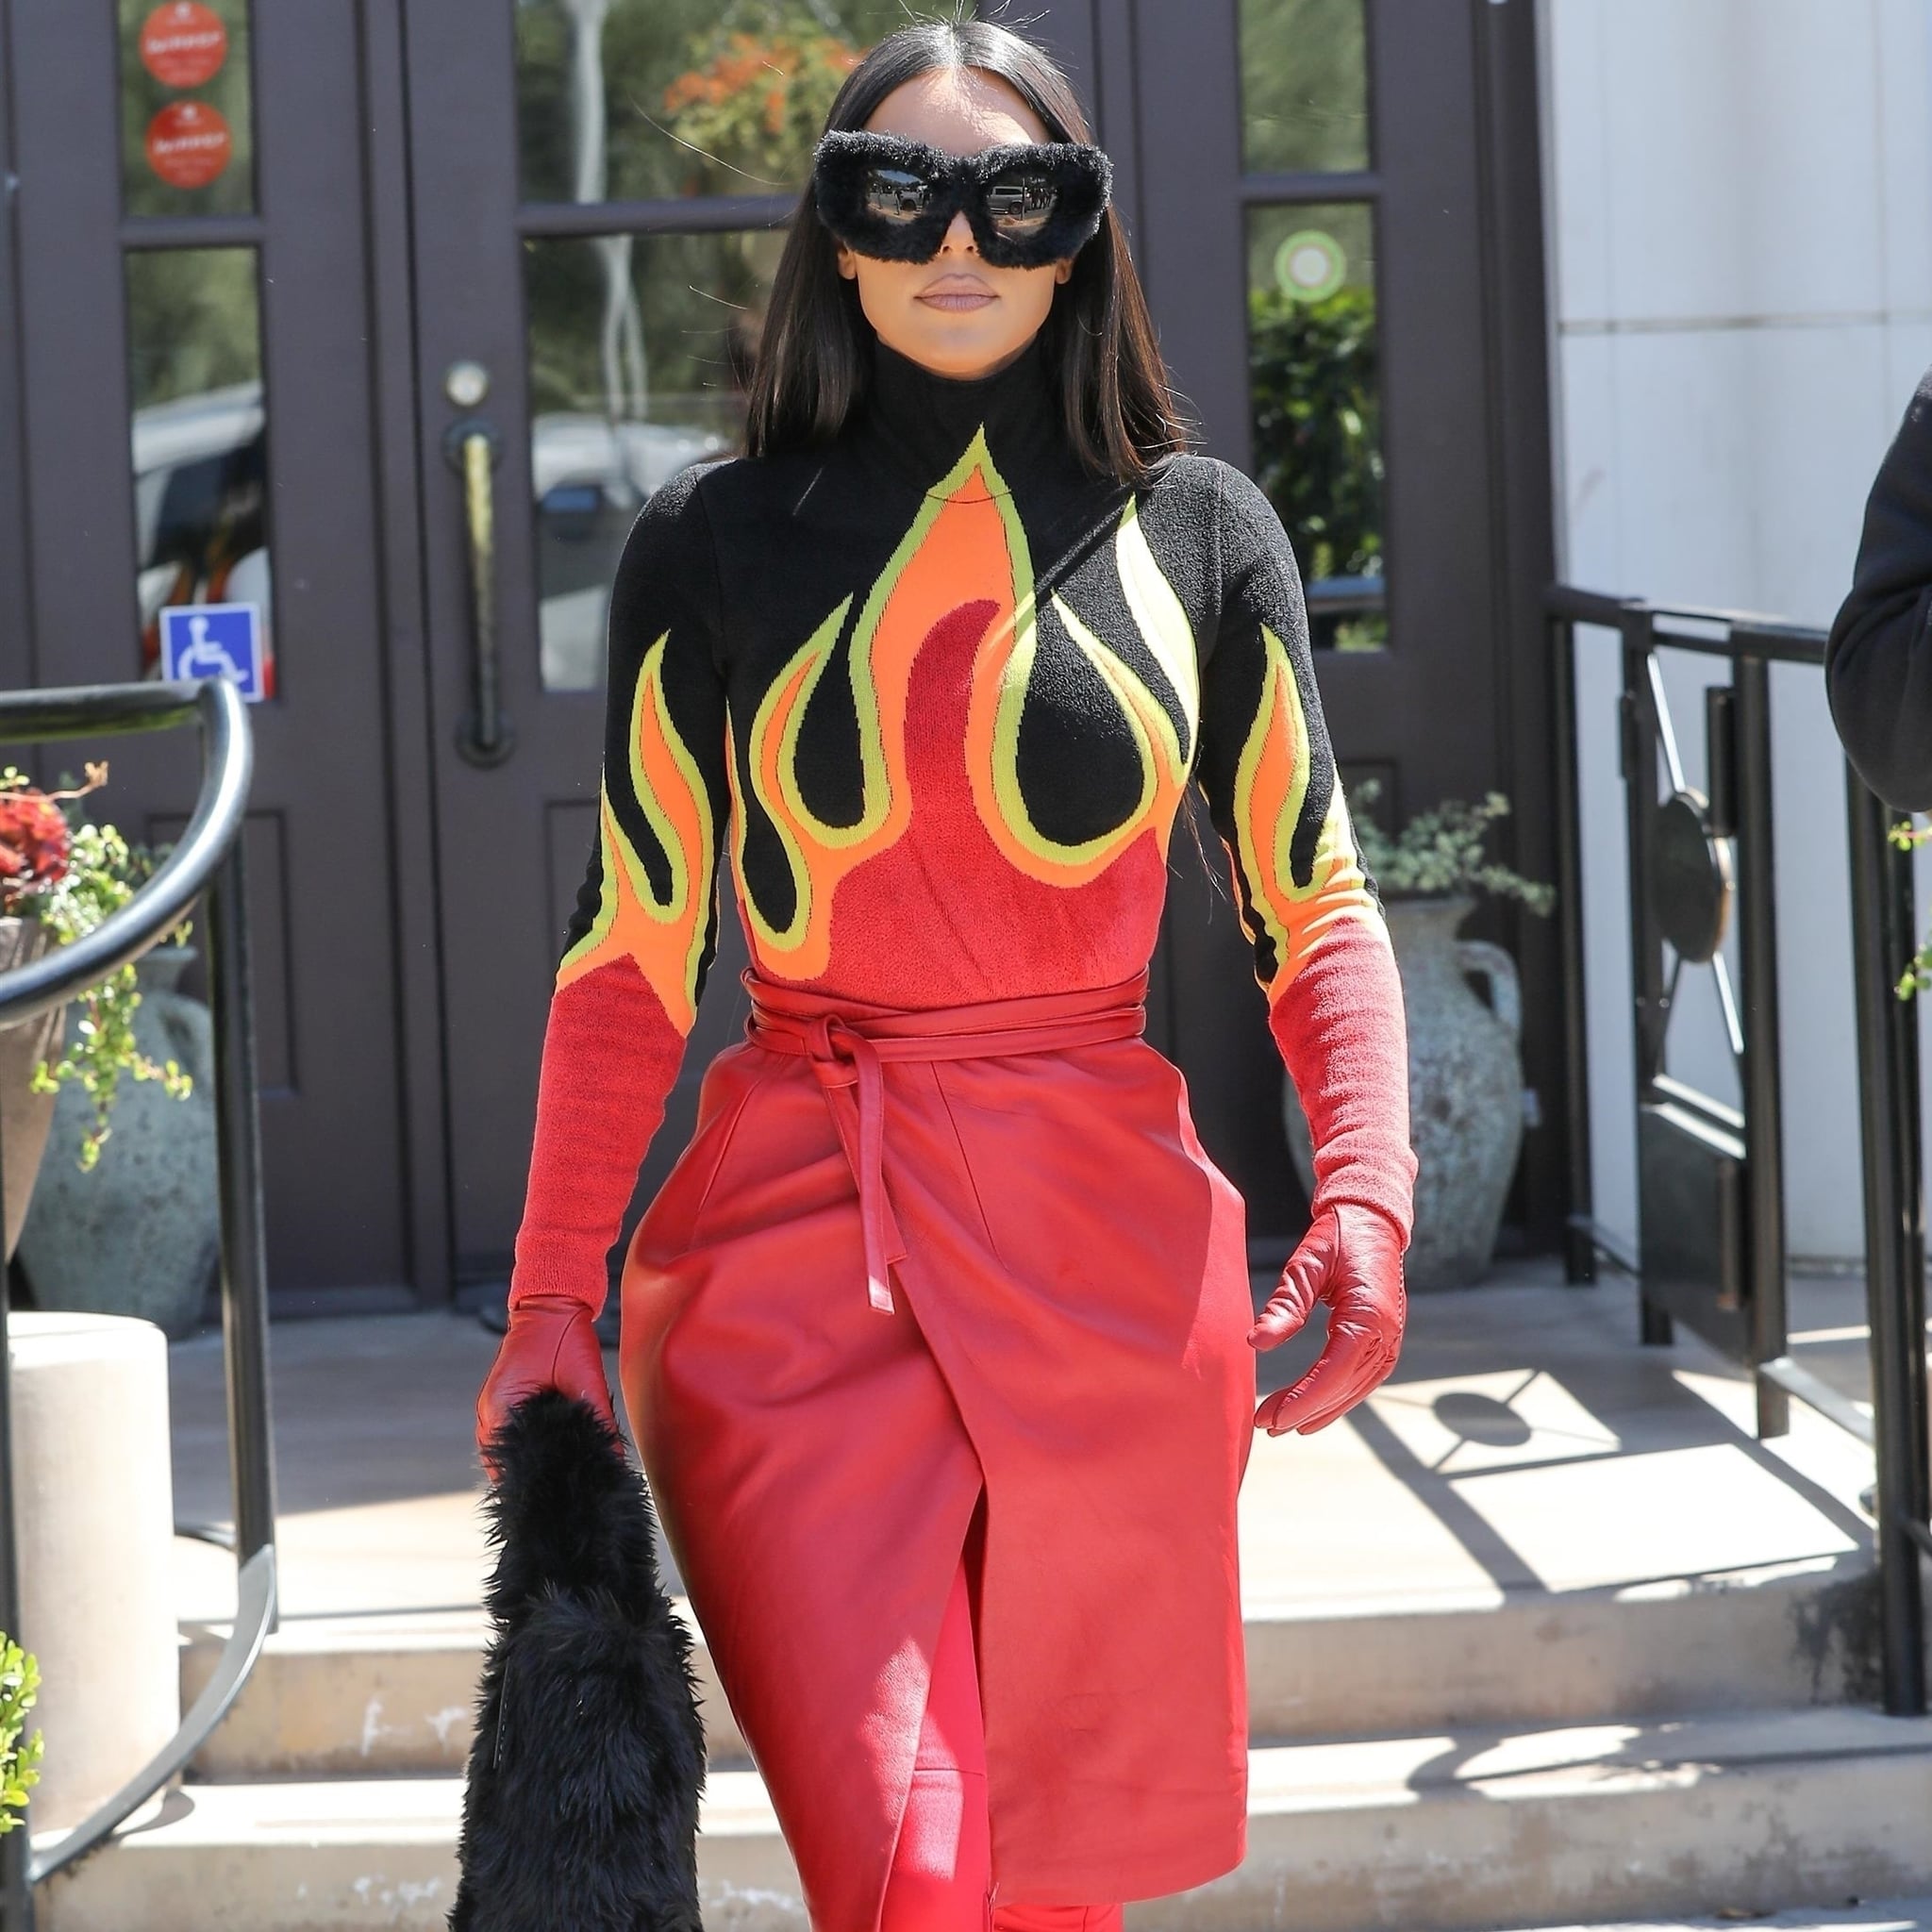 Kim Kardashian Wears a Flame-Print Top and Fuzzy Accessories